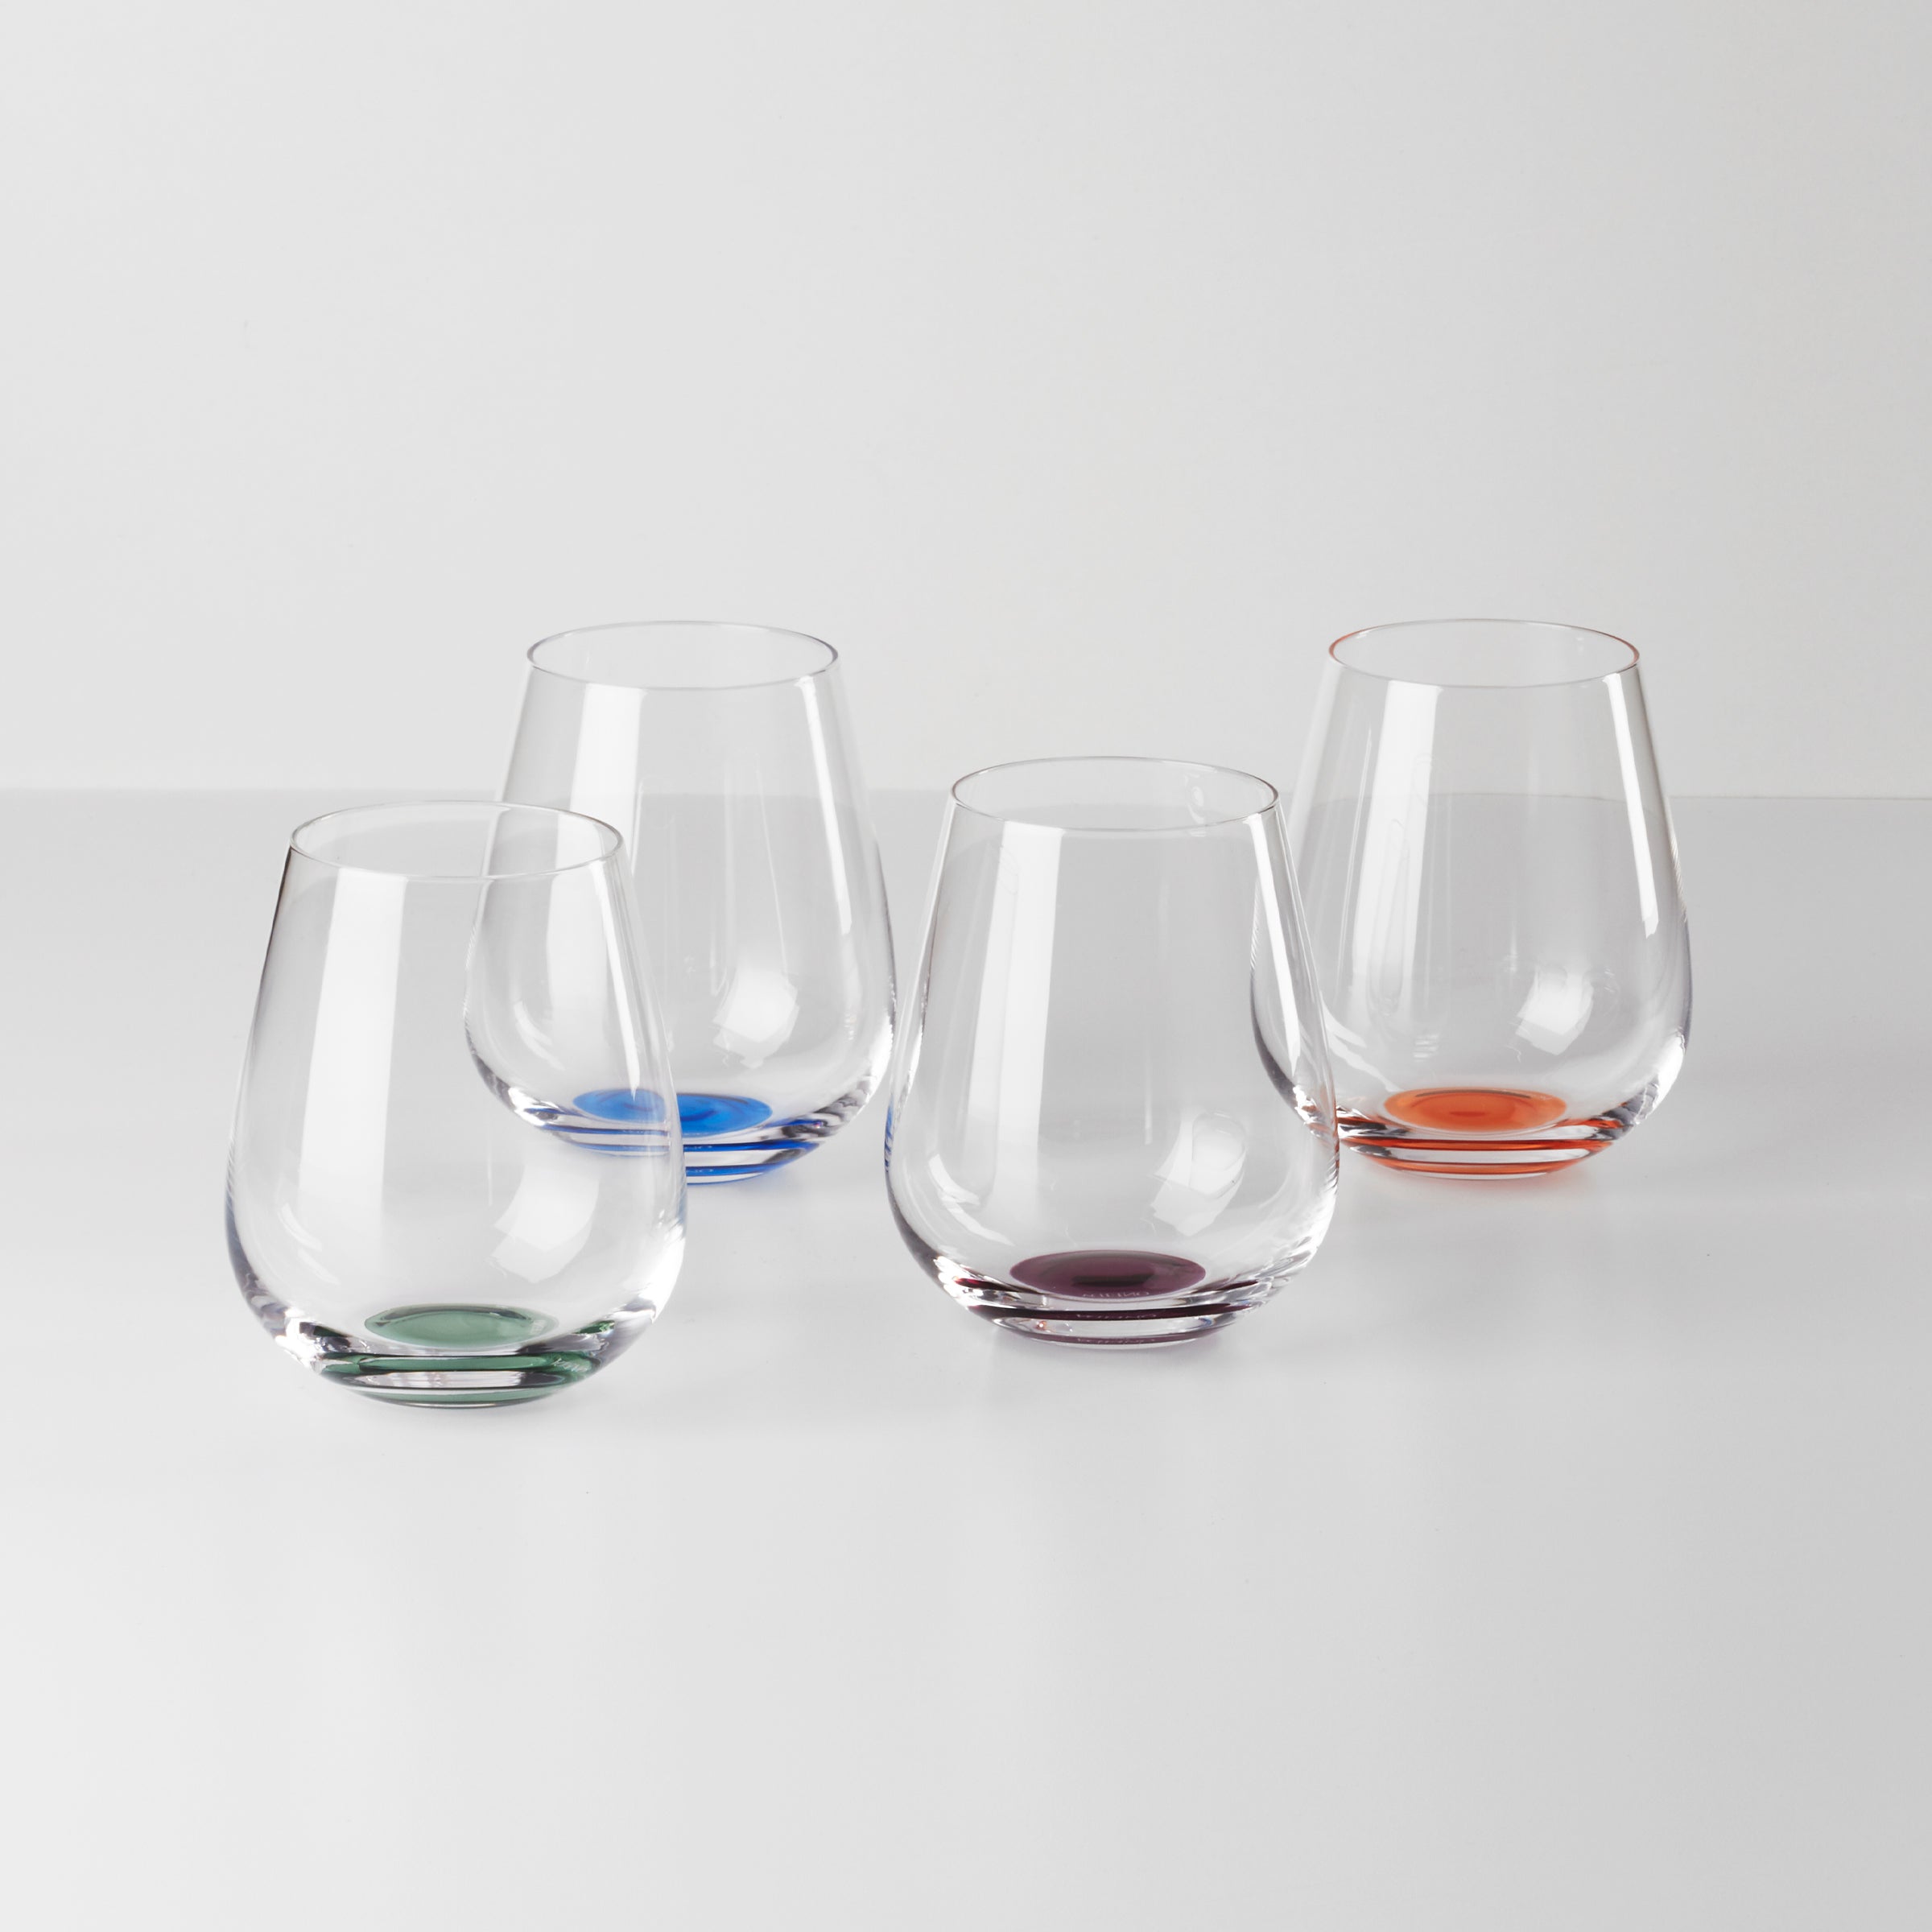 Vanleonet Stemless Wine Glasses Set of 4, 12oz Diamond Shaped Wine Glass,  Unique Short Tumblers, Coc…See more Vanleonet Stemless Wine Glasses Set of